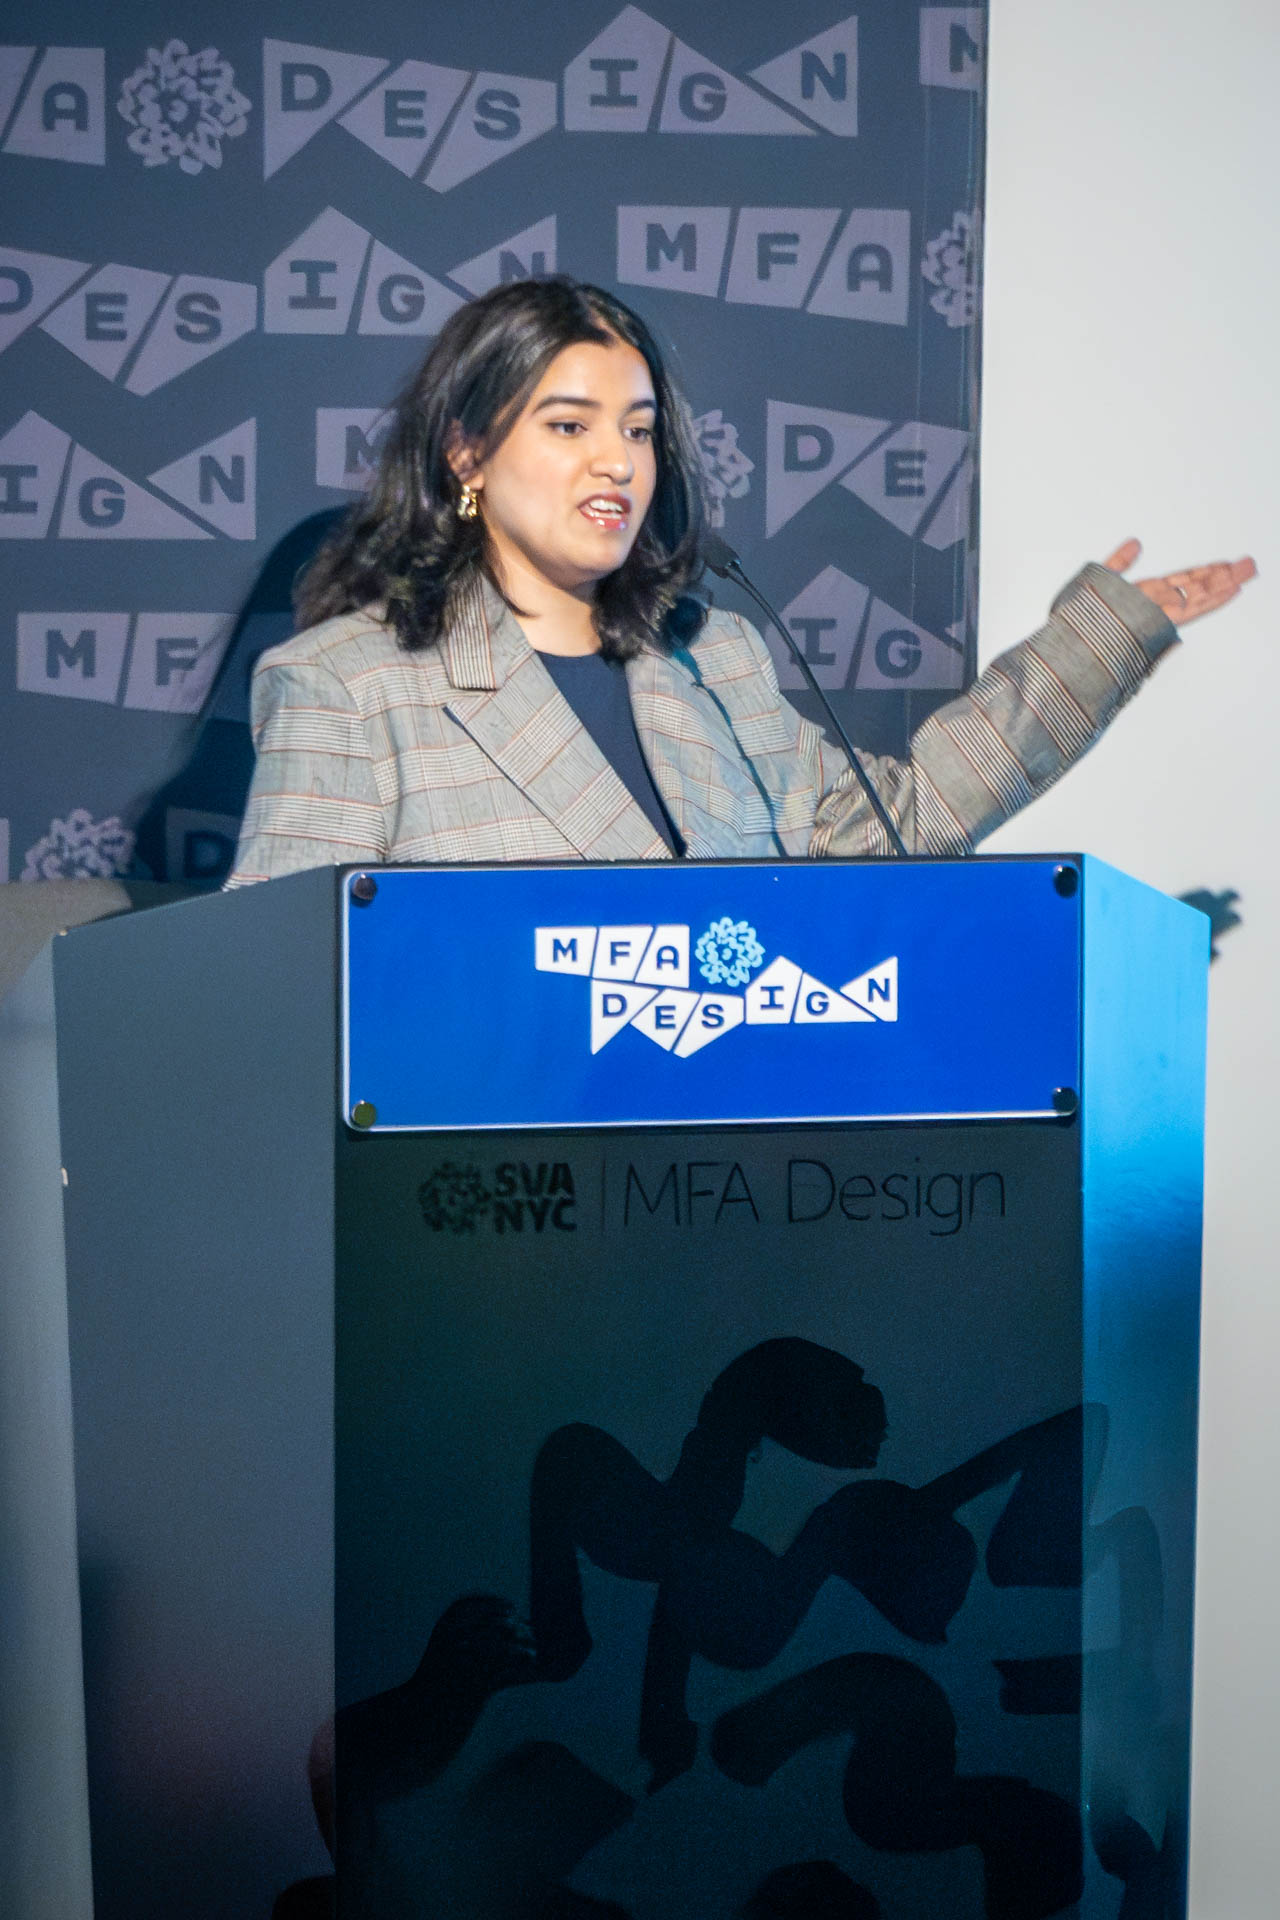 student at a podium giving a presentation